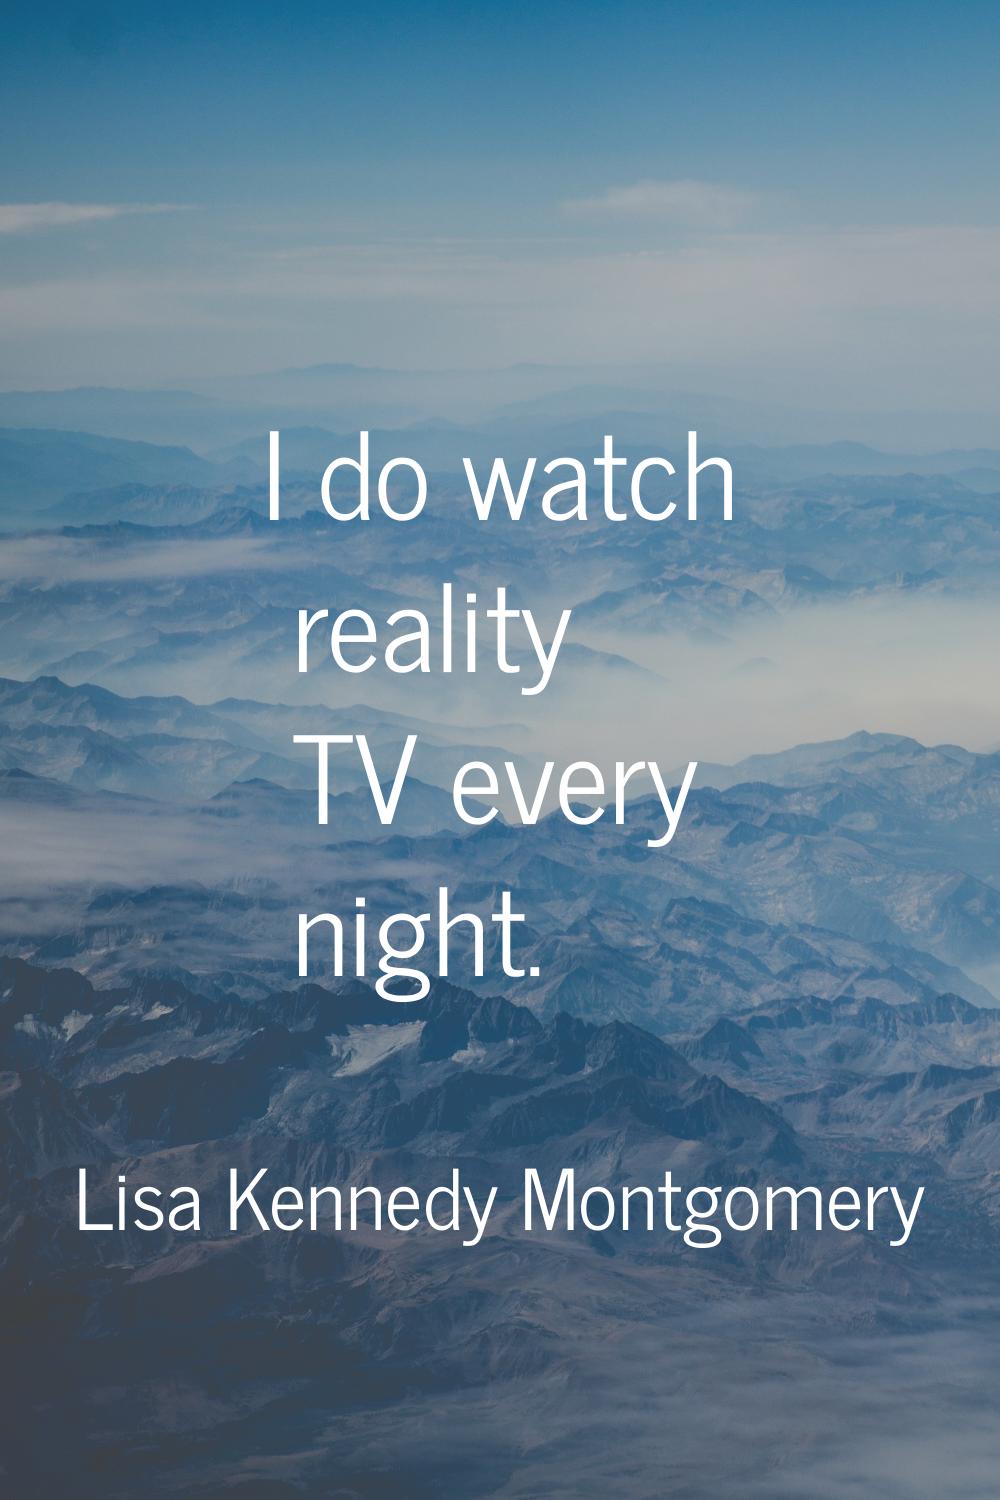 I do watch reality TV every night.